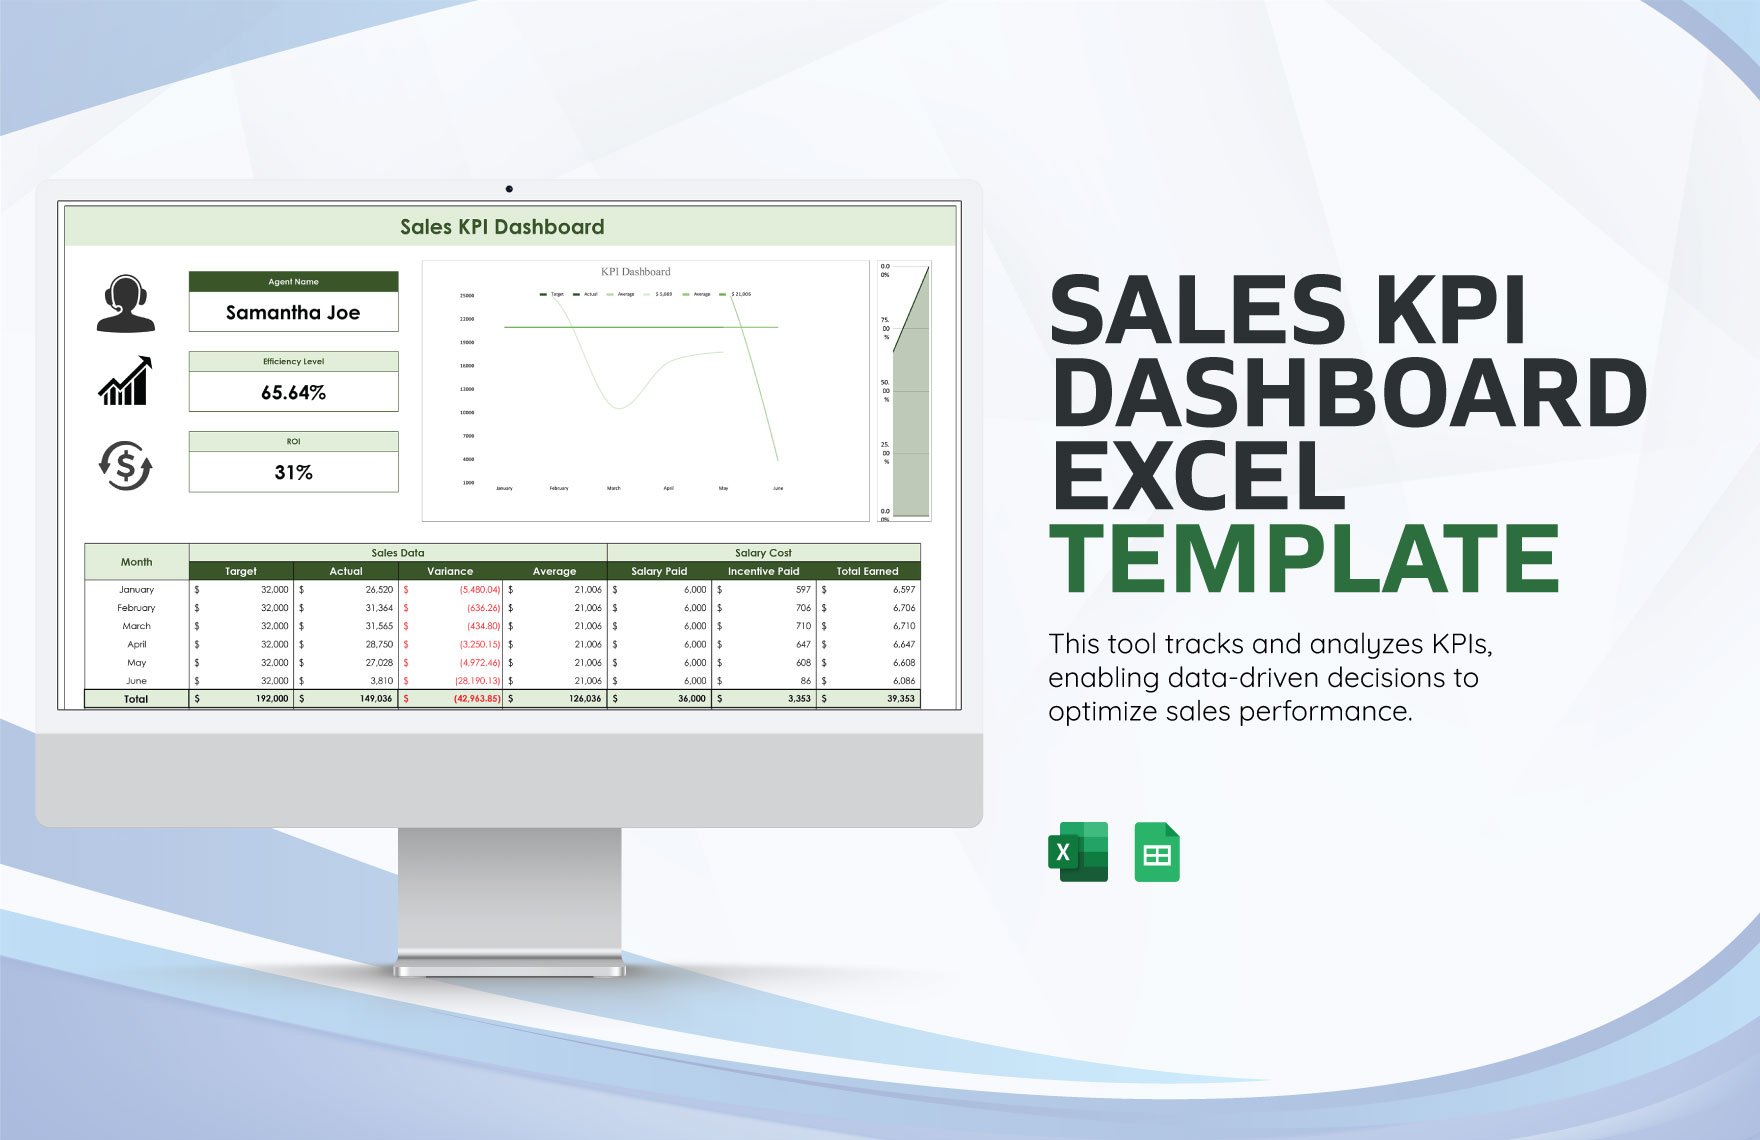 Sales KPI Dashboard Excel Template in Excel, Google Sheets